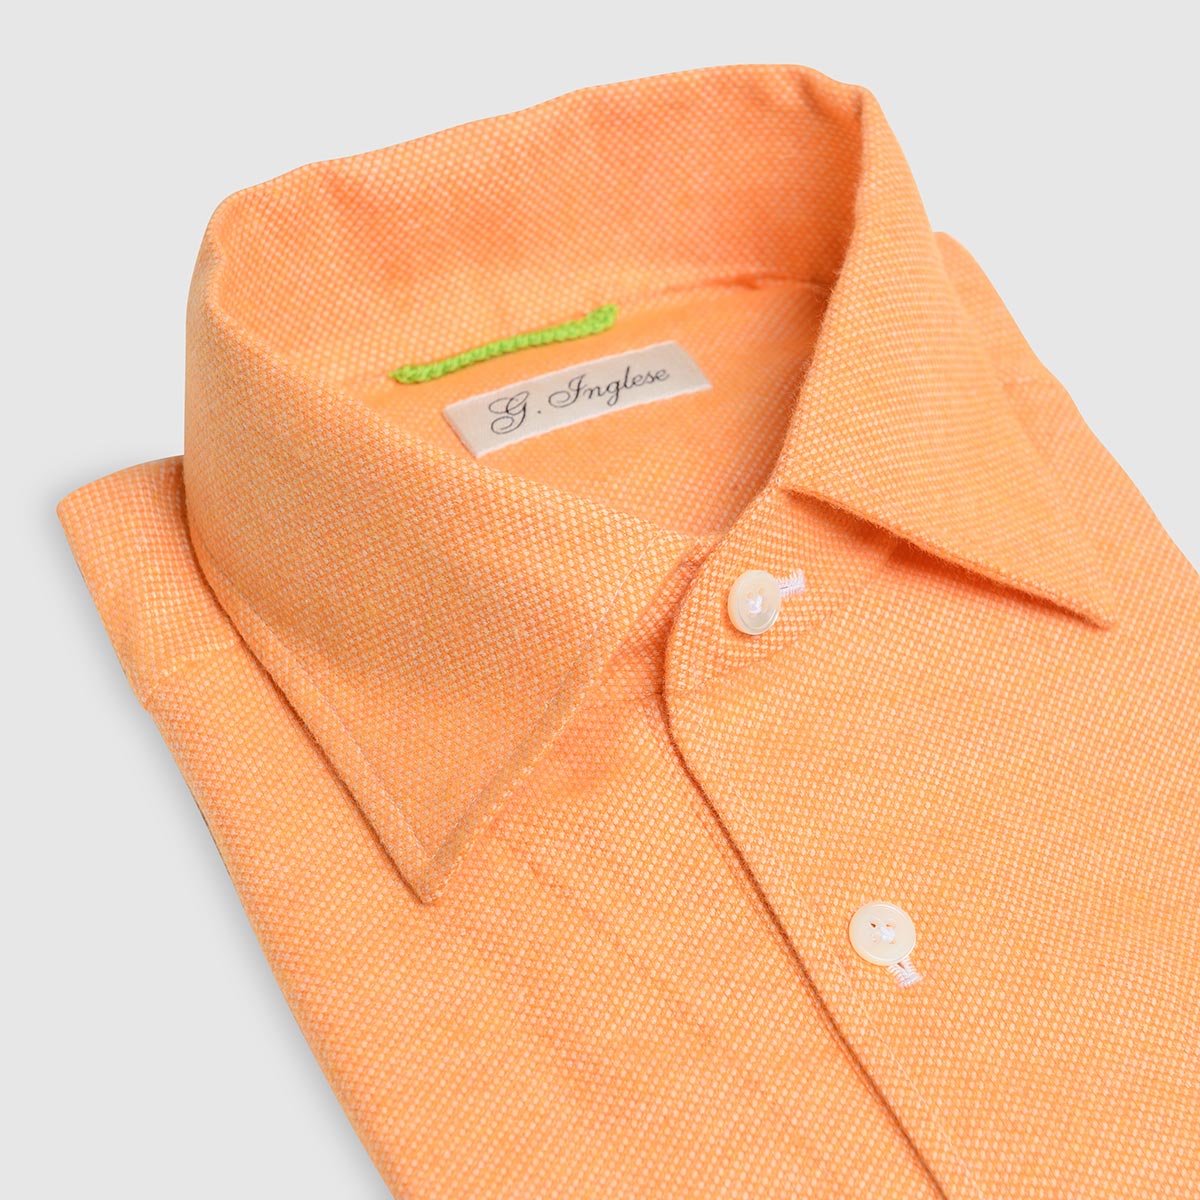 Mastroianni Orange Cotton Flannel Polo Shirt G. Inglese on sale 2022 2